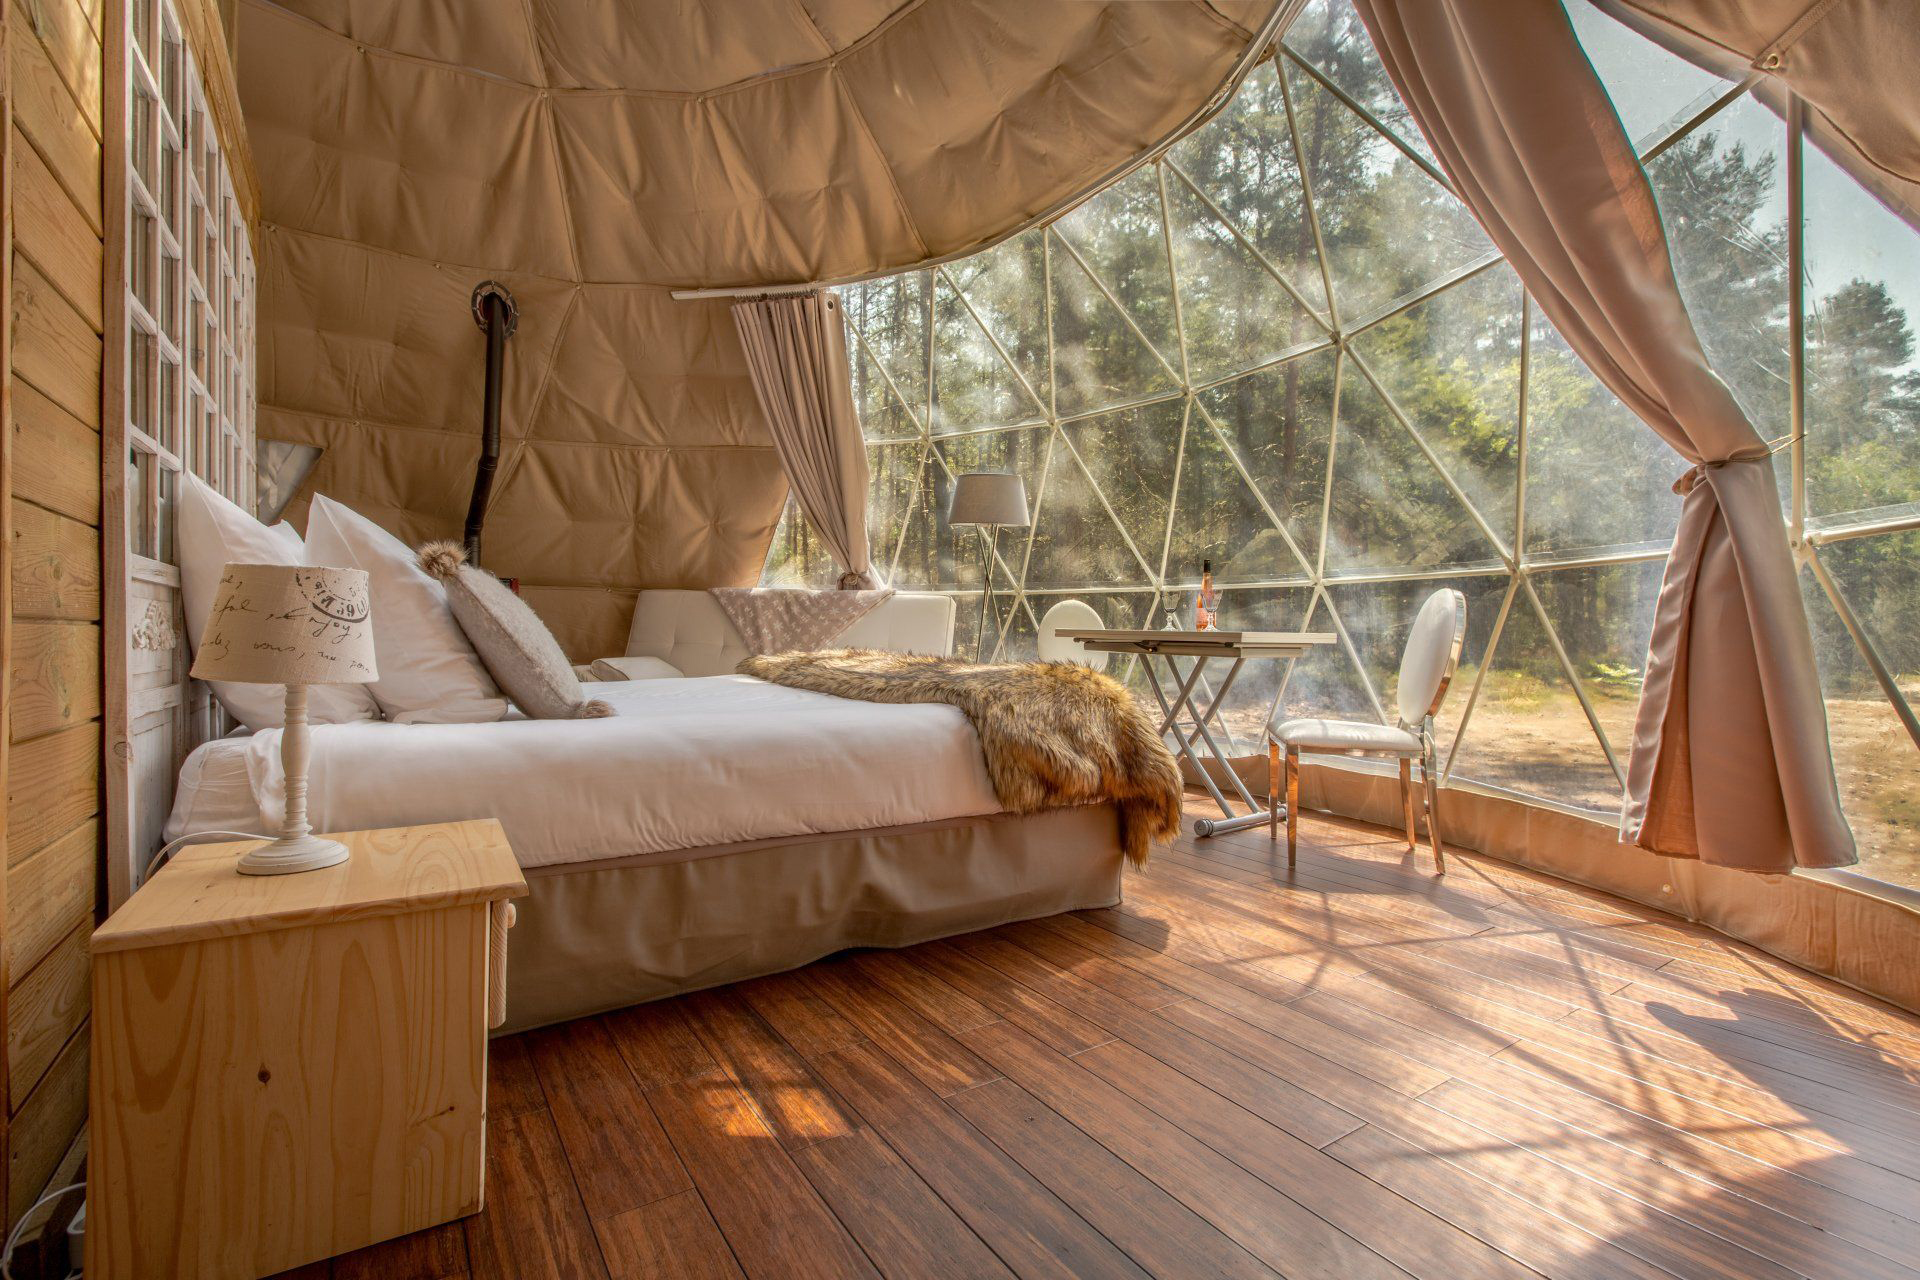 dream home - dream dome - dome tent - geodome - glamping dome tent (2)